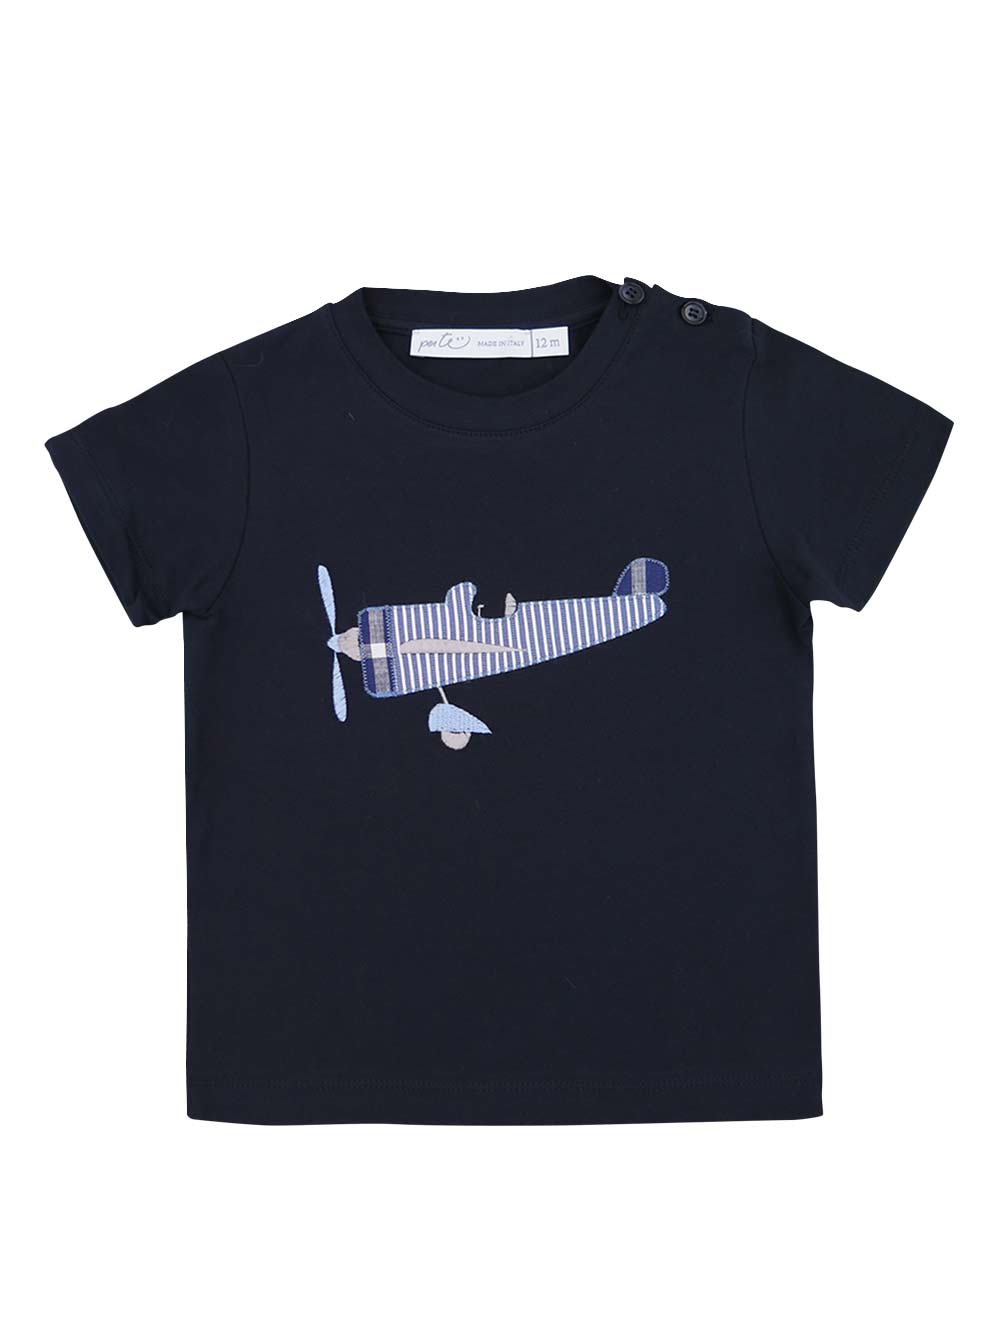 Navy Aircraft T-Shirt